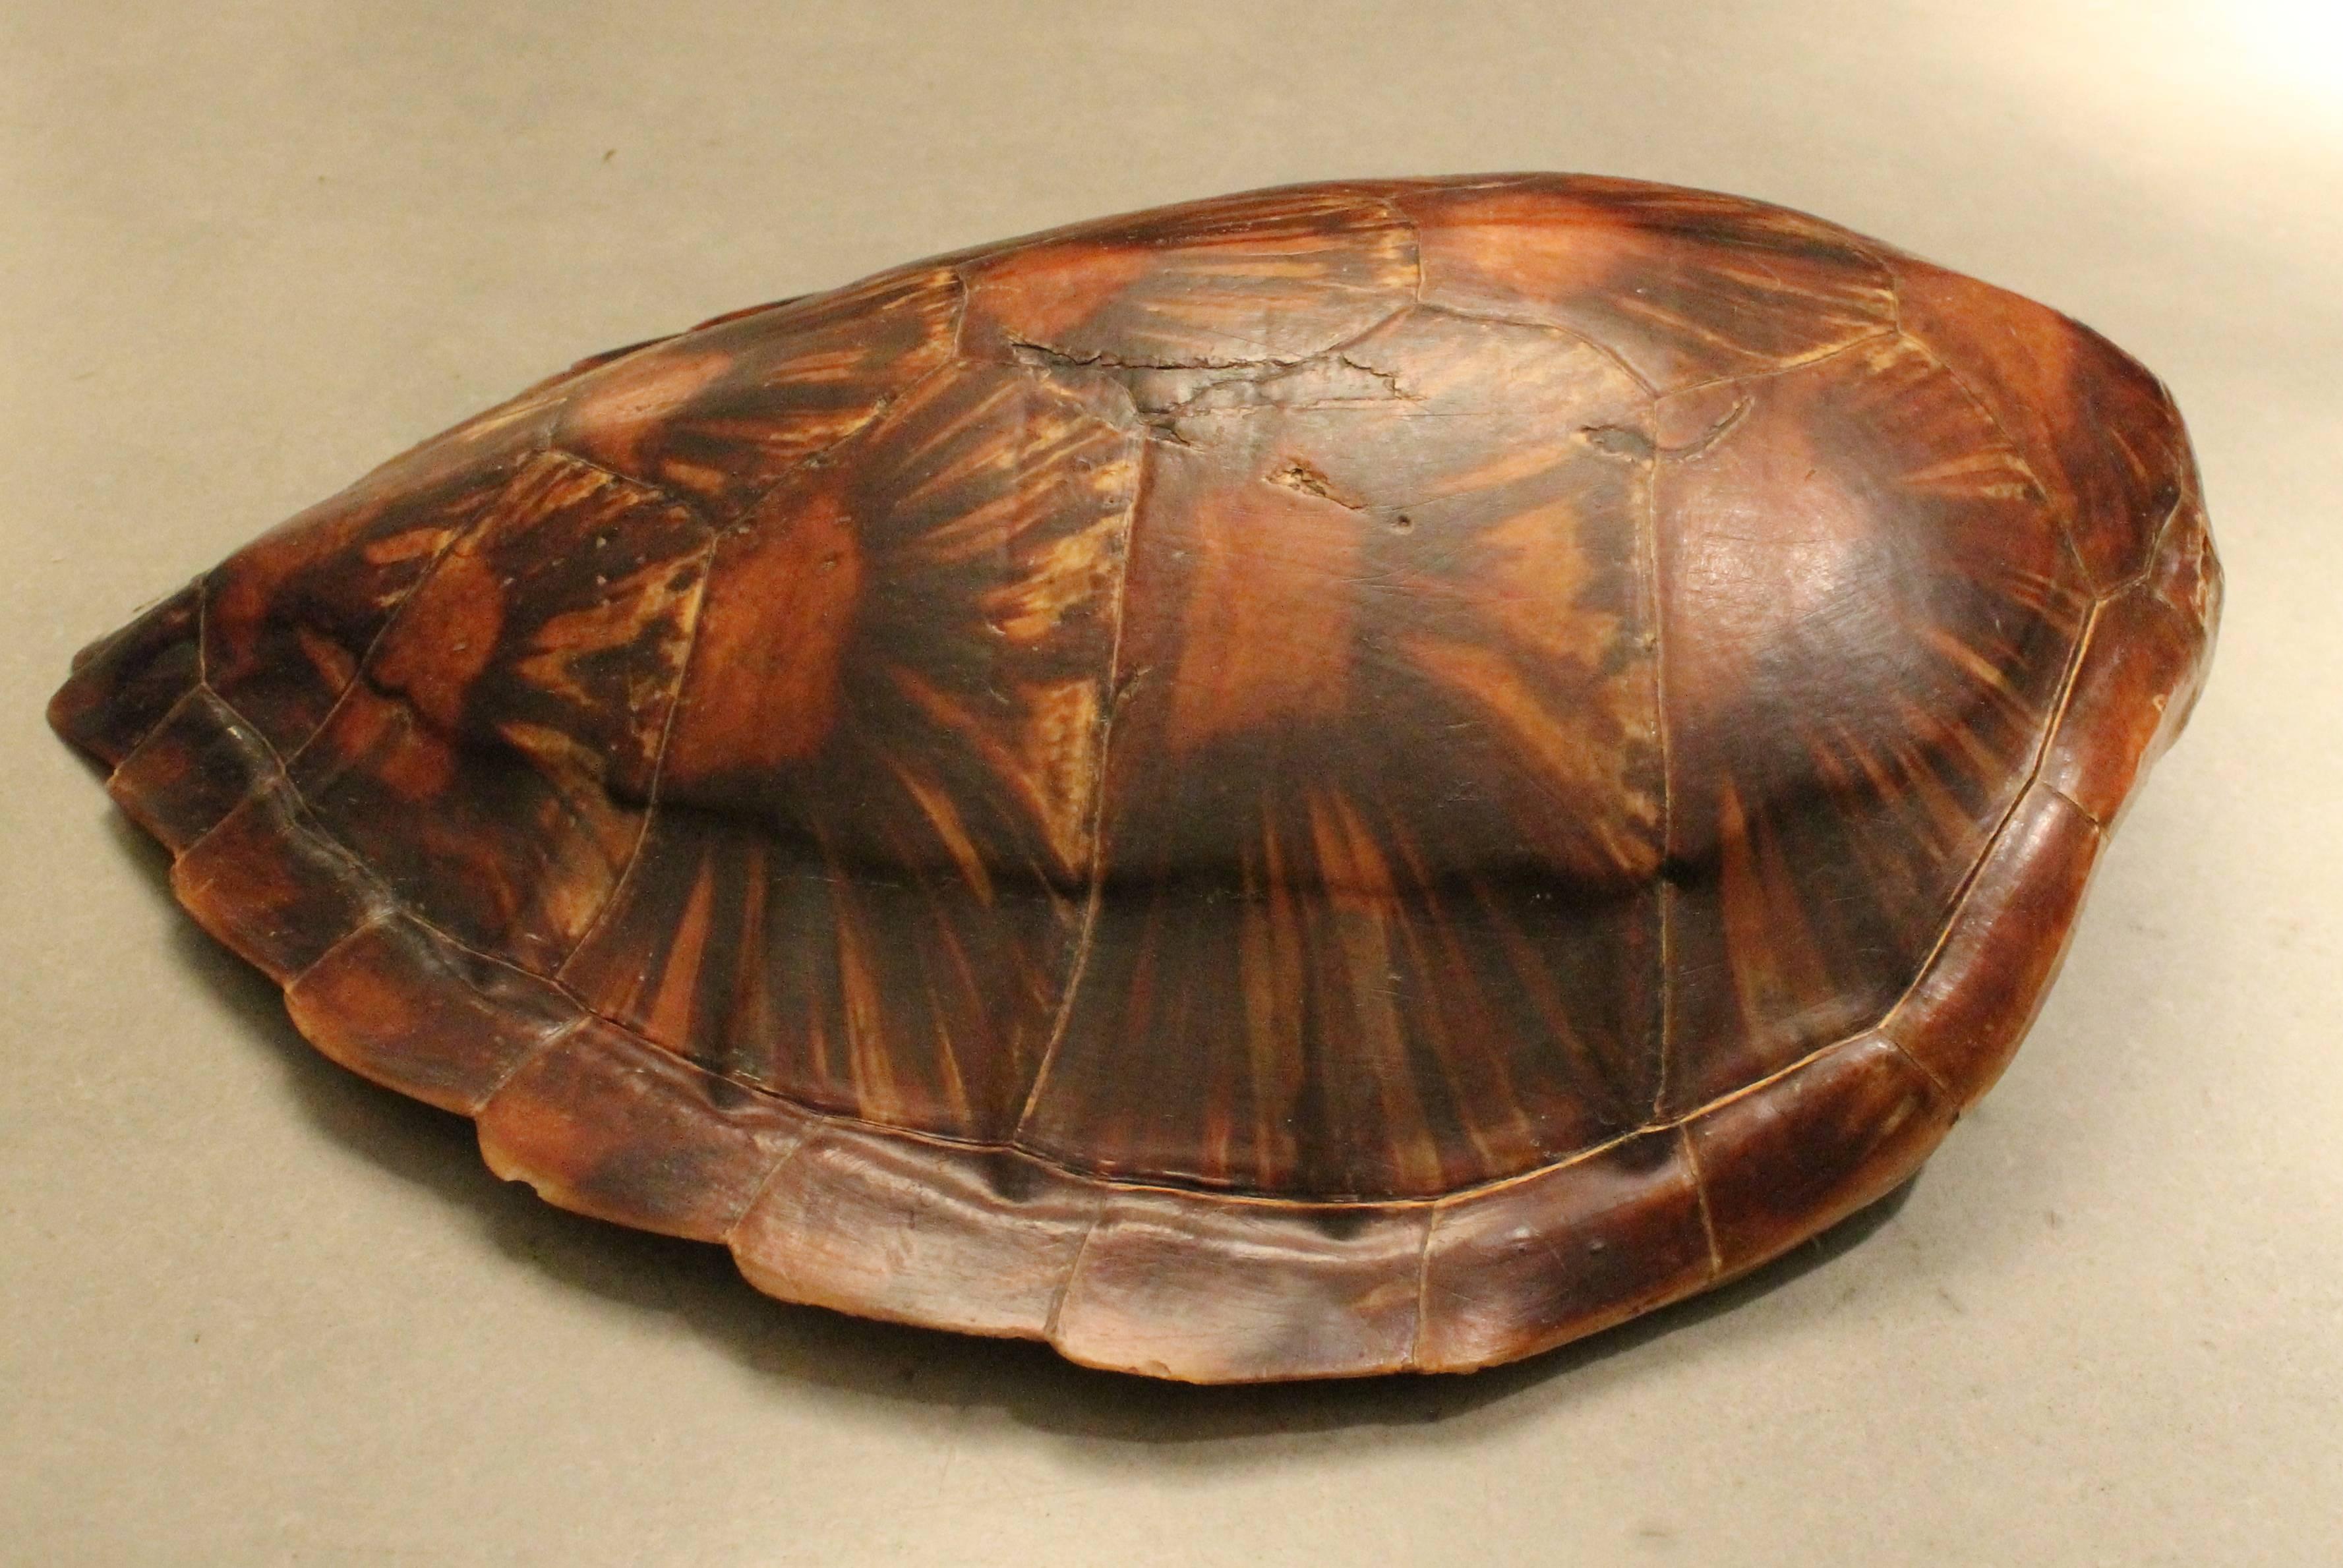 Shield of a Sea Turtle, Indonesia, ca. 1930